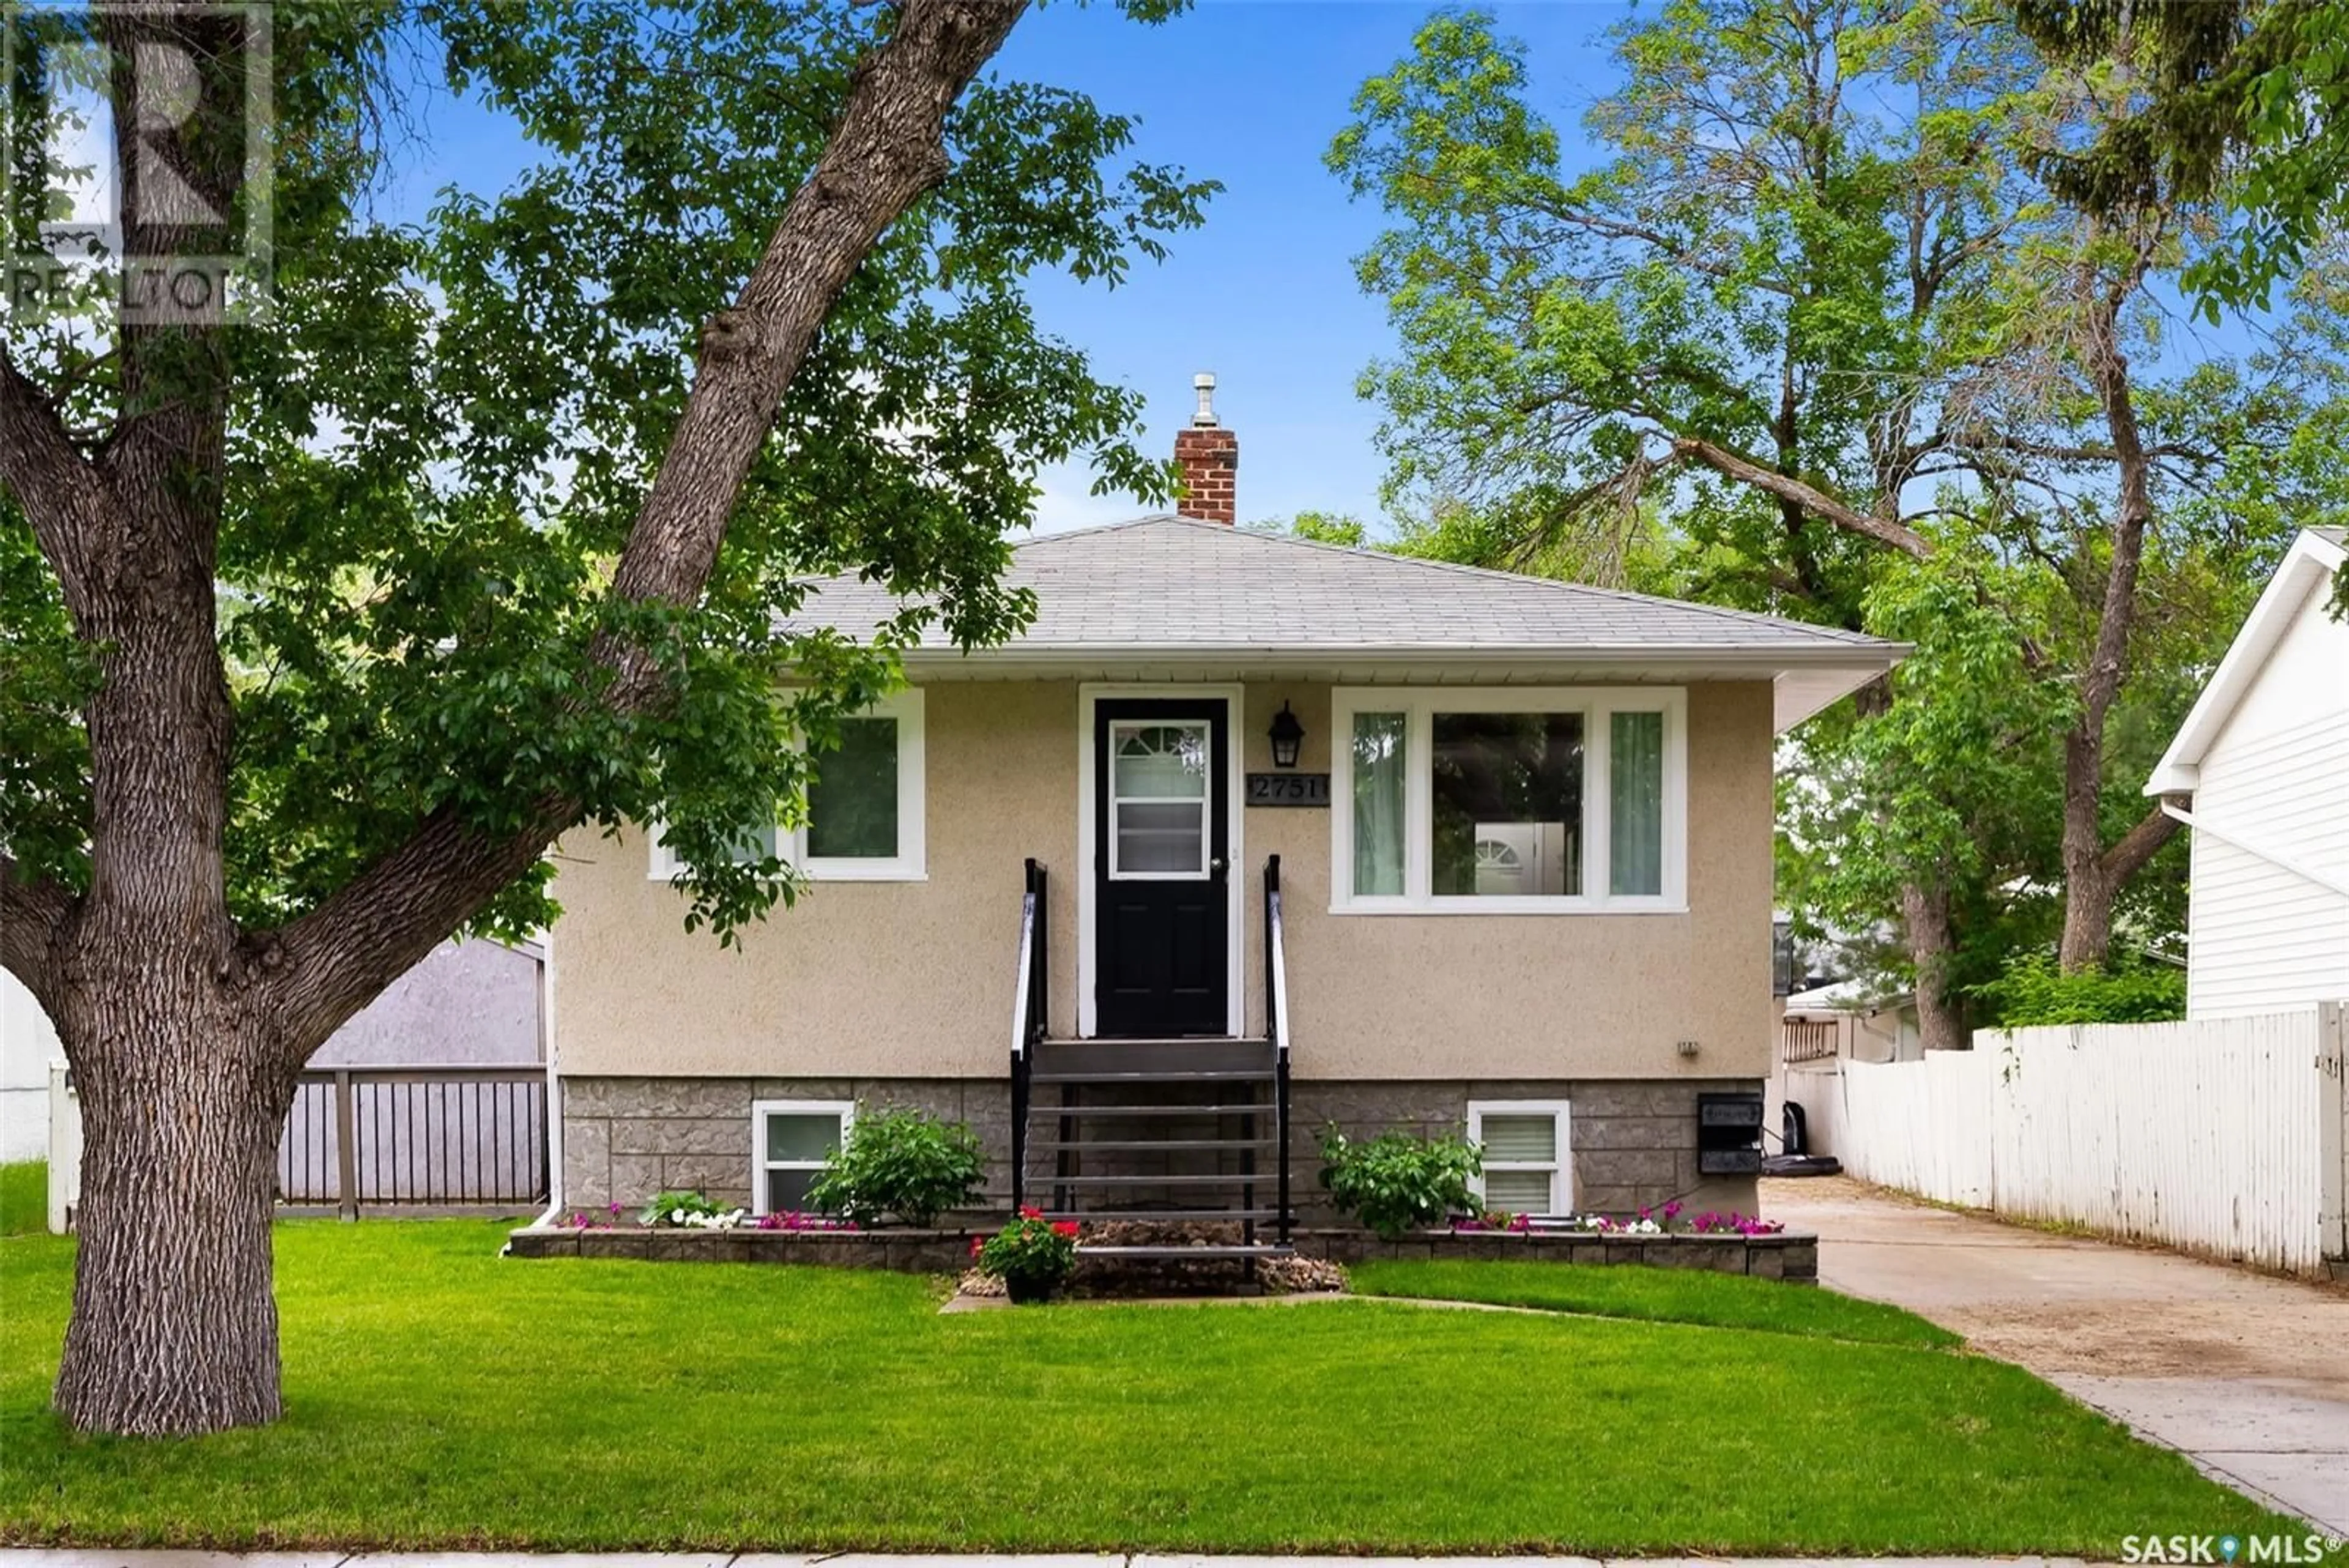 Home with vinyl exterior material for 2751 MACKAY STREET, Regina Saskatchewan S4N2T8